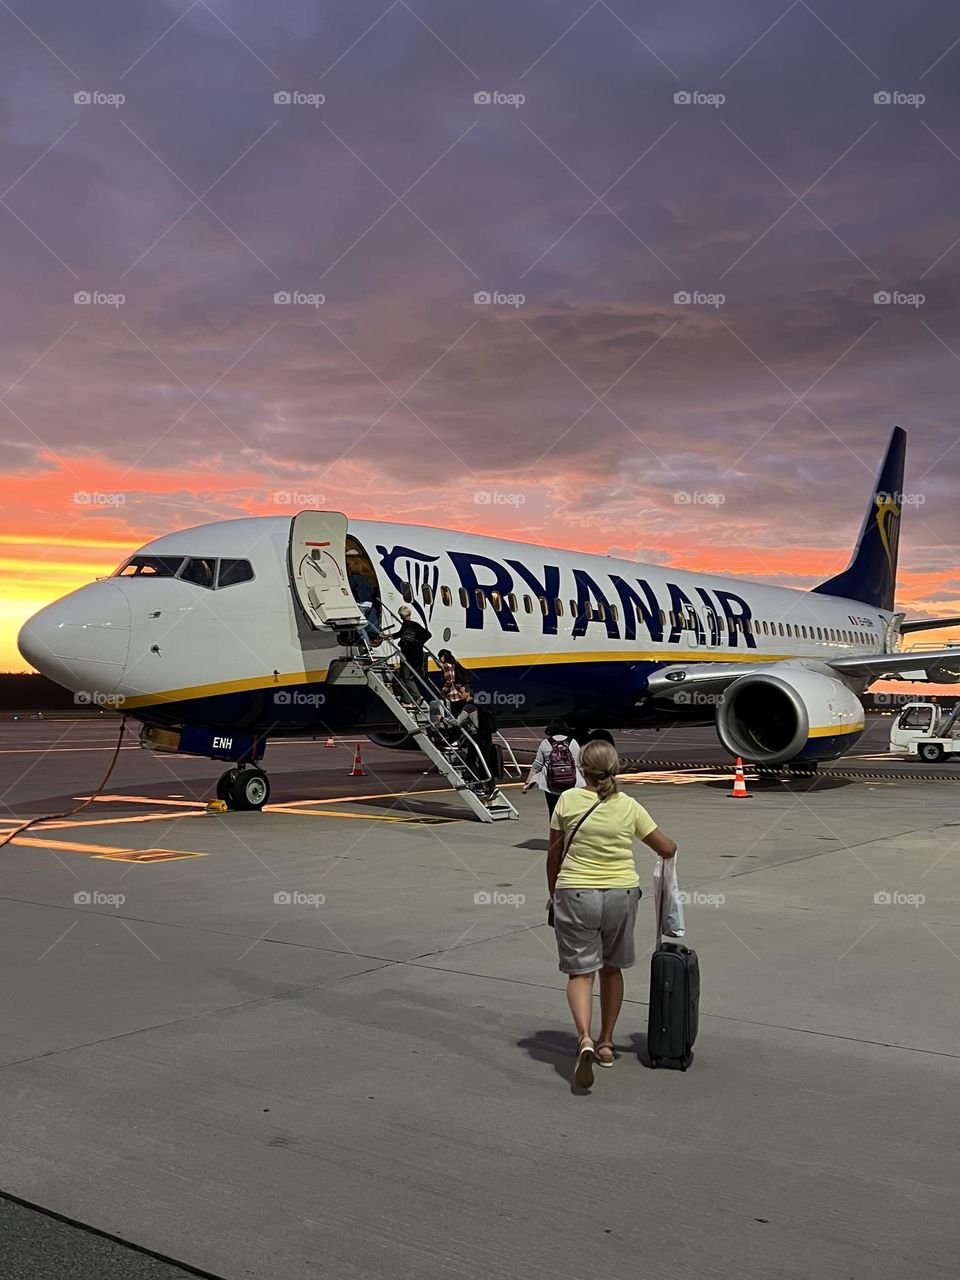 Aircraft Ryanair. Beautiful sunset. Airport vibes. 